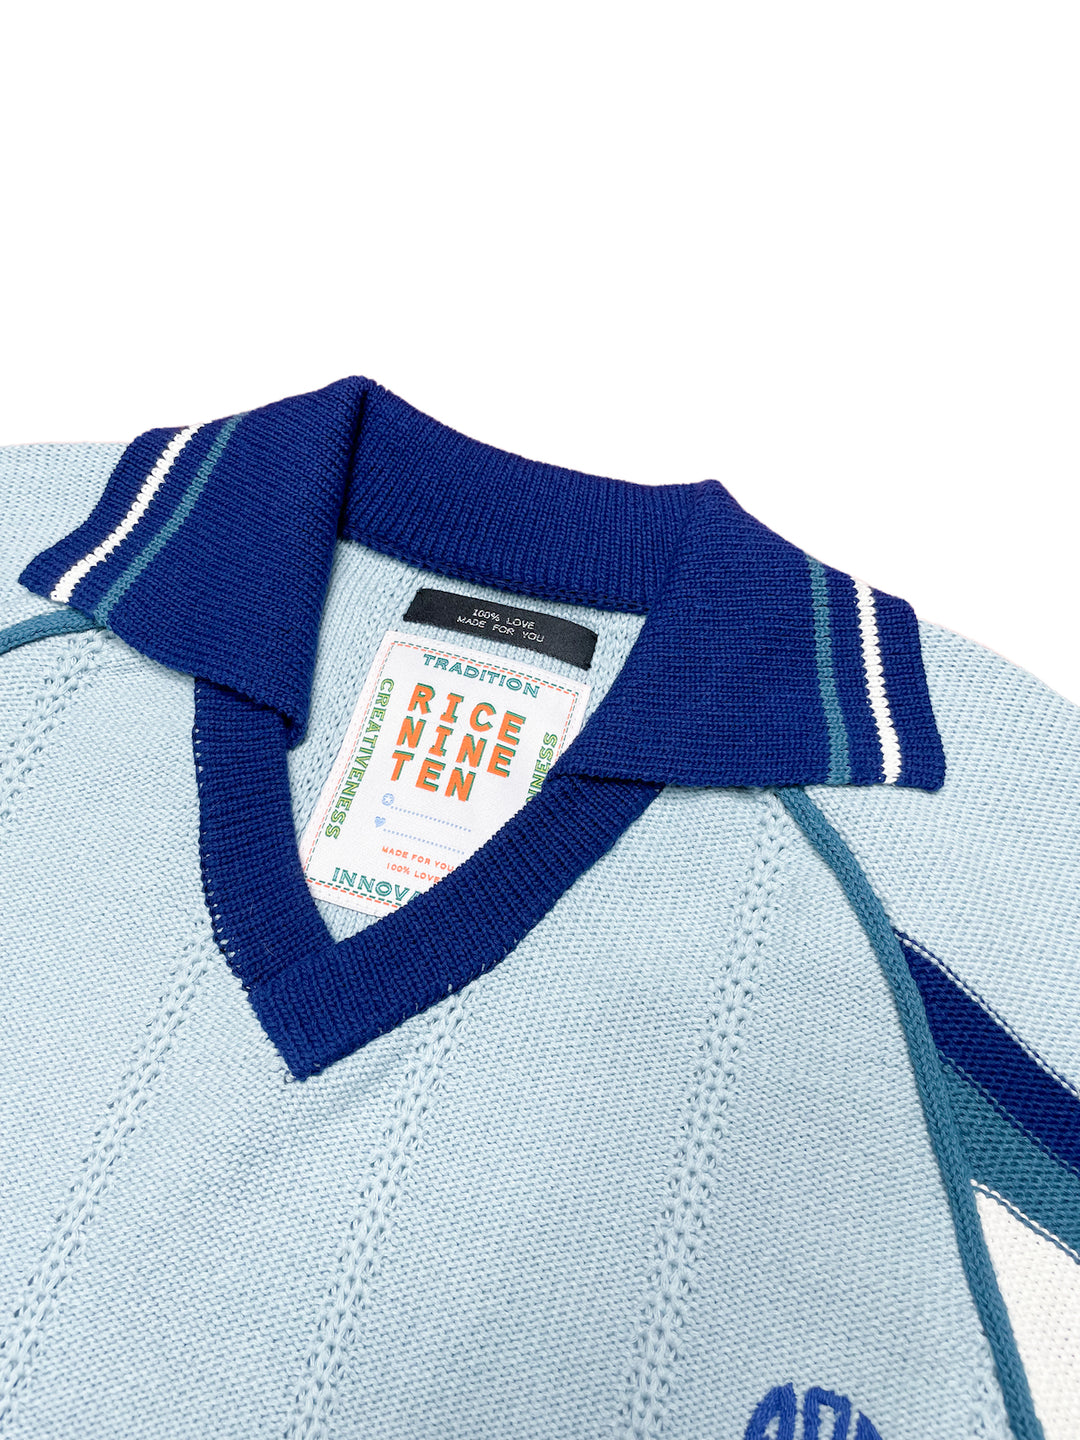 Knitting Soccer Jersey LIGHT BLUE